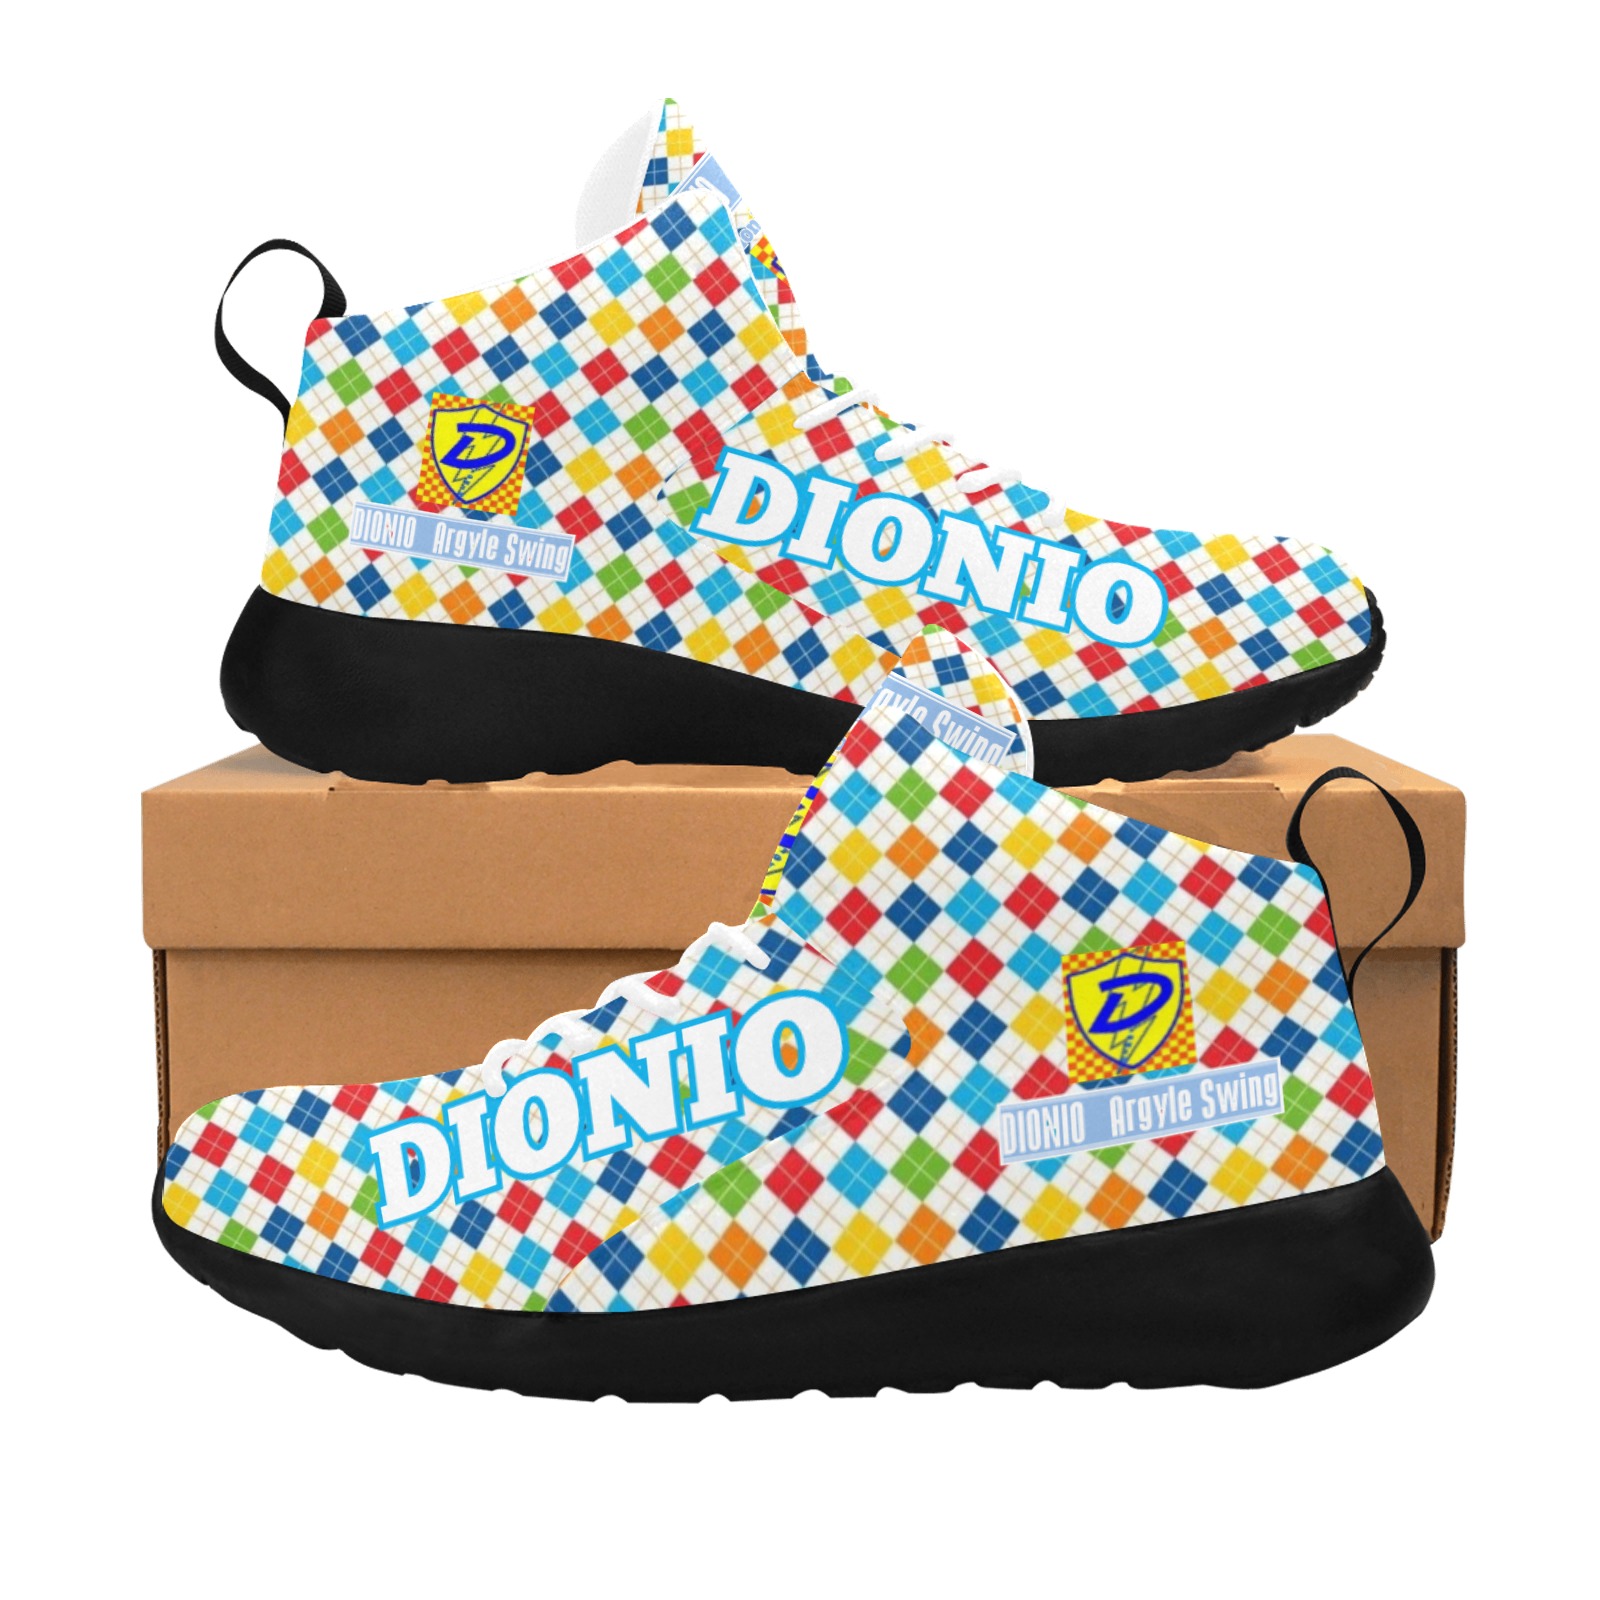 DIONIO - Argyle Swing Hi-Top BasketBall Shoes Men's Chukka Training Shoes (Model 57502)